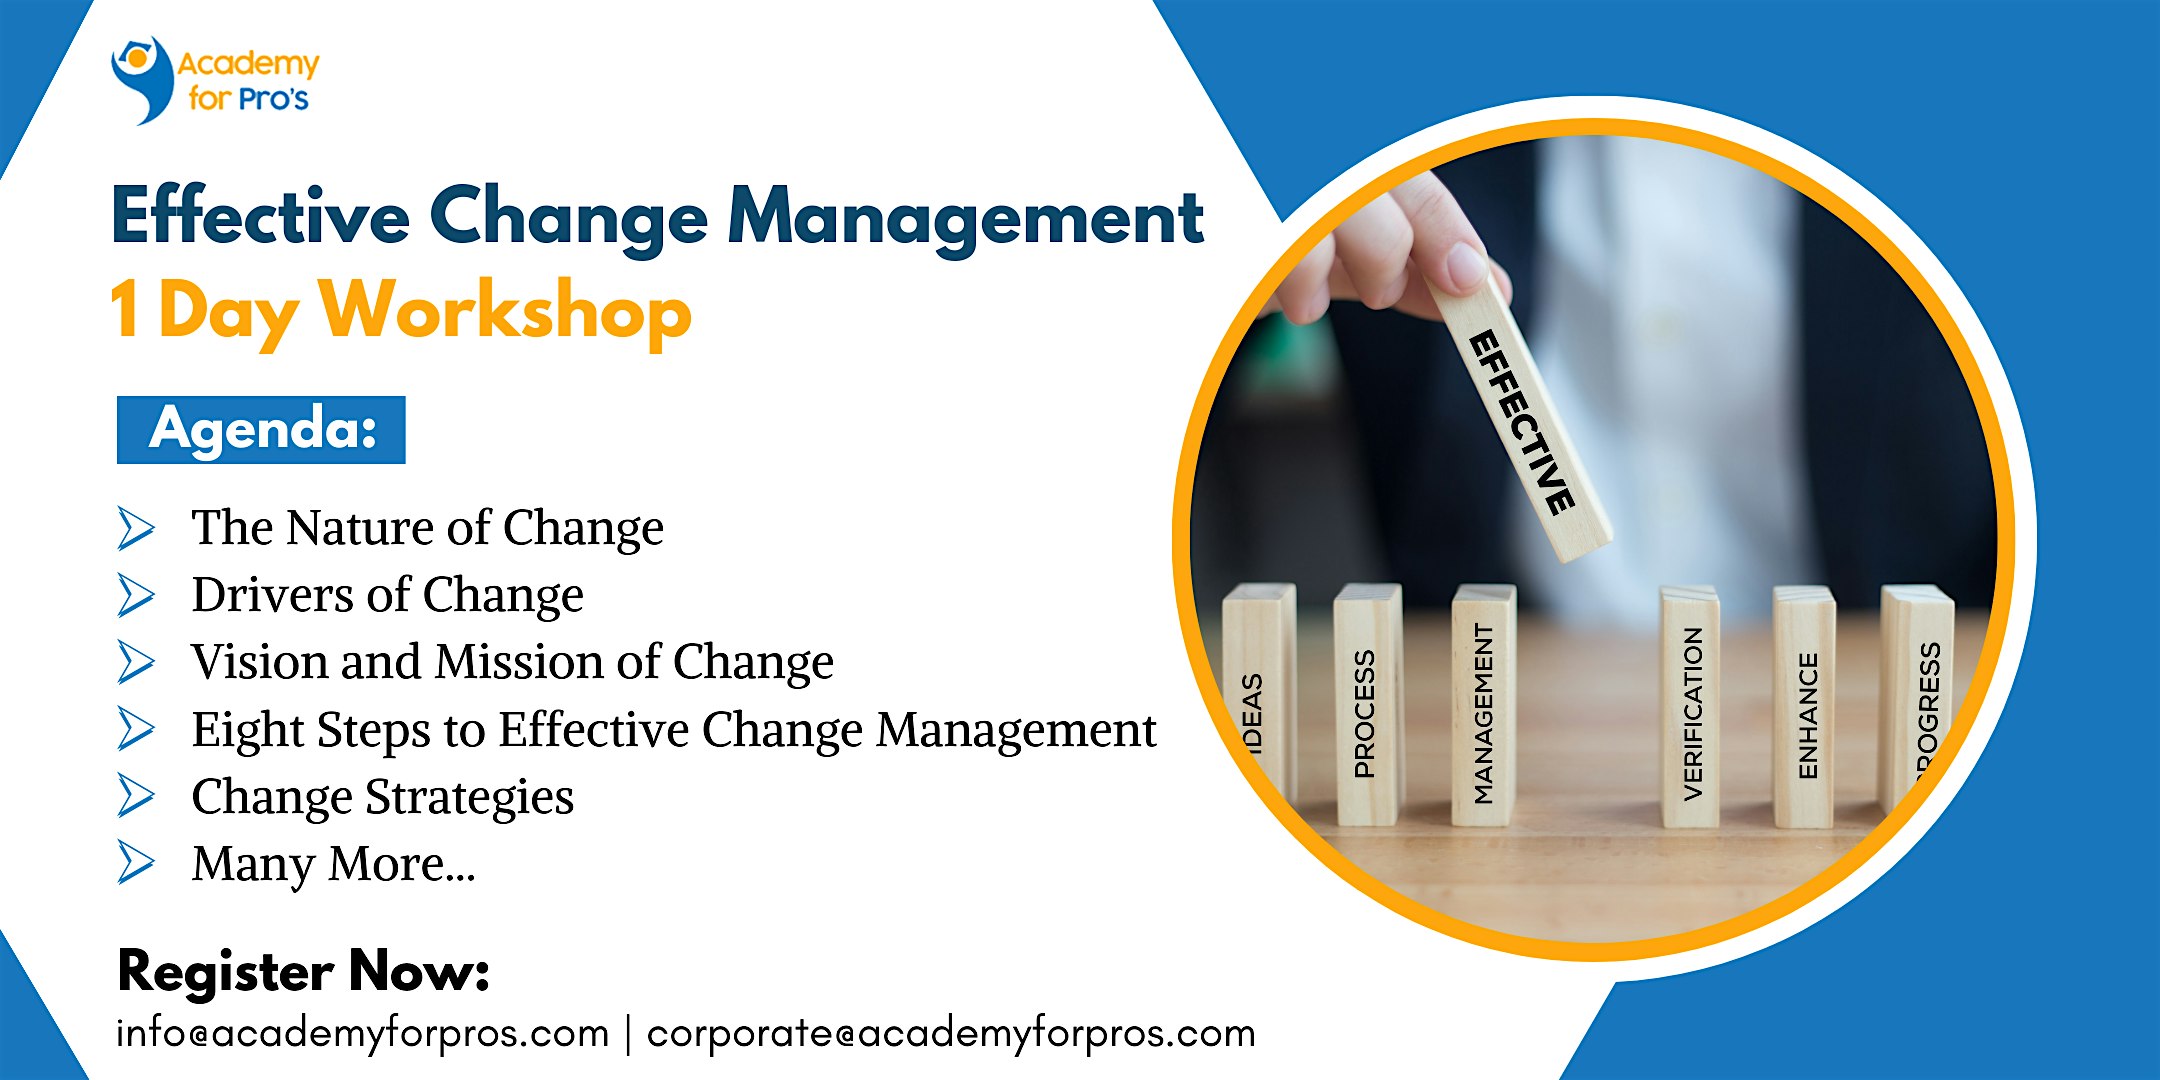 Effective Change Management 1 Day Workshop in Peoria, IL